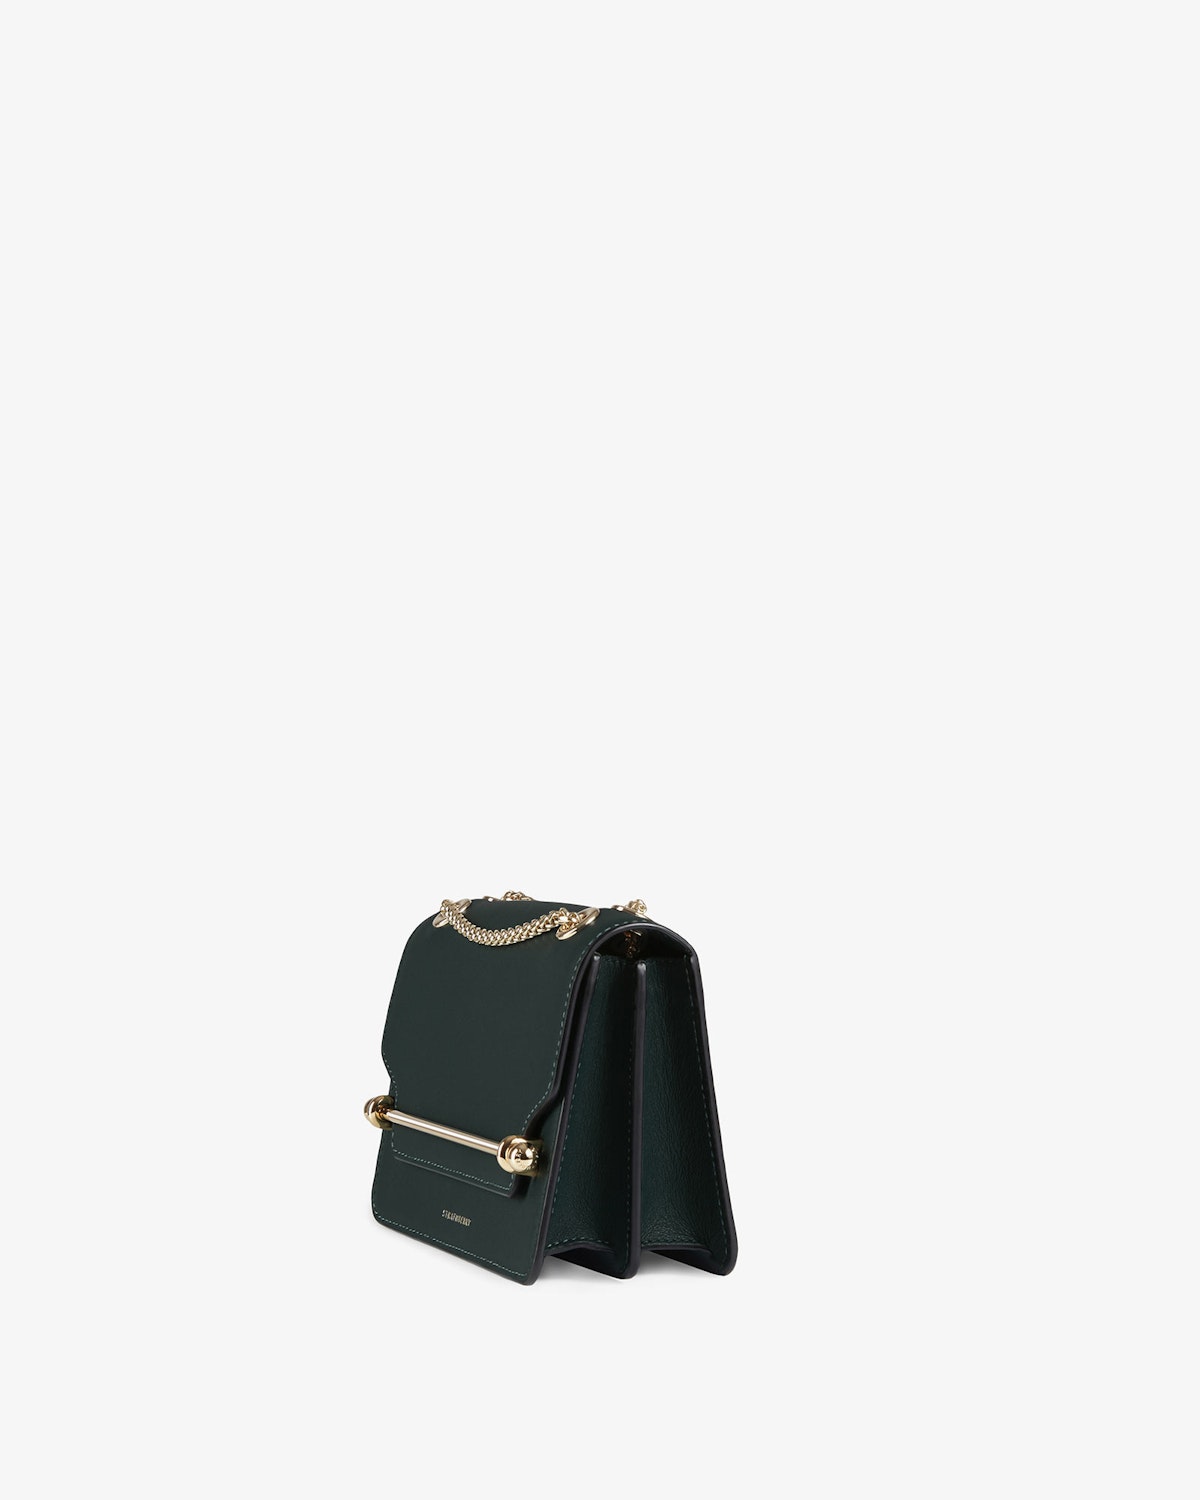 Strathberry - East/West Mini - Crossbody Leather Mini Handbag - Green ...